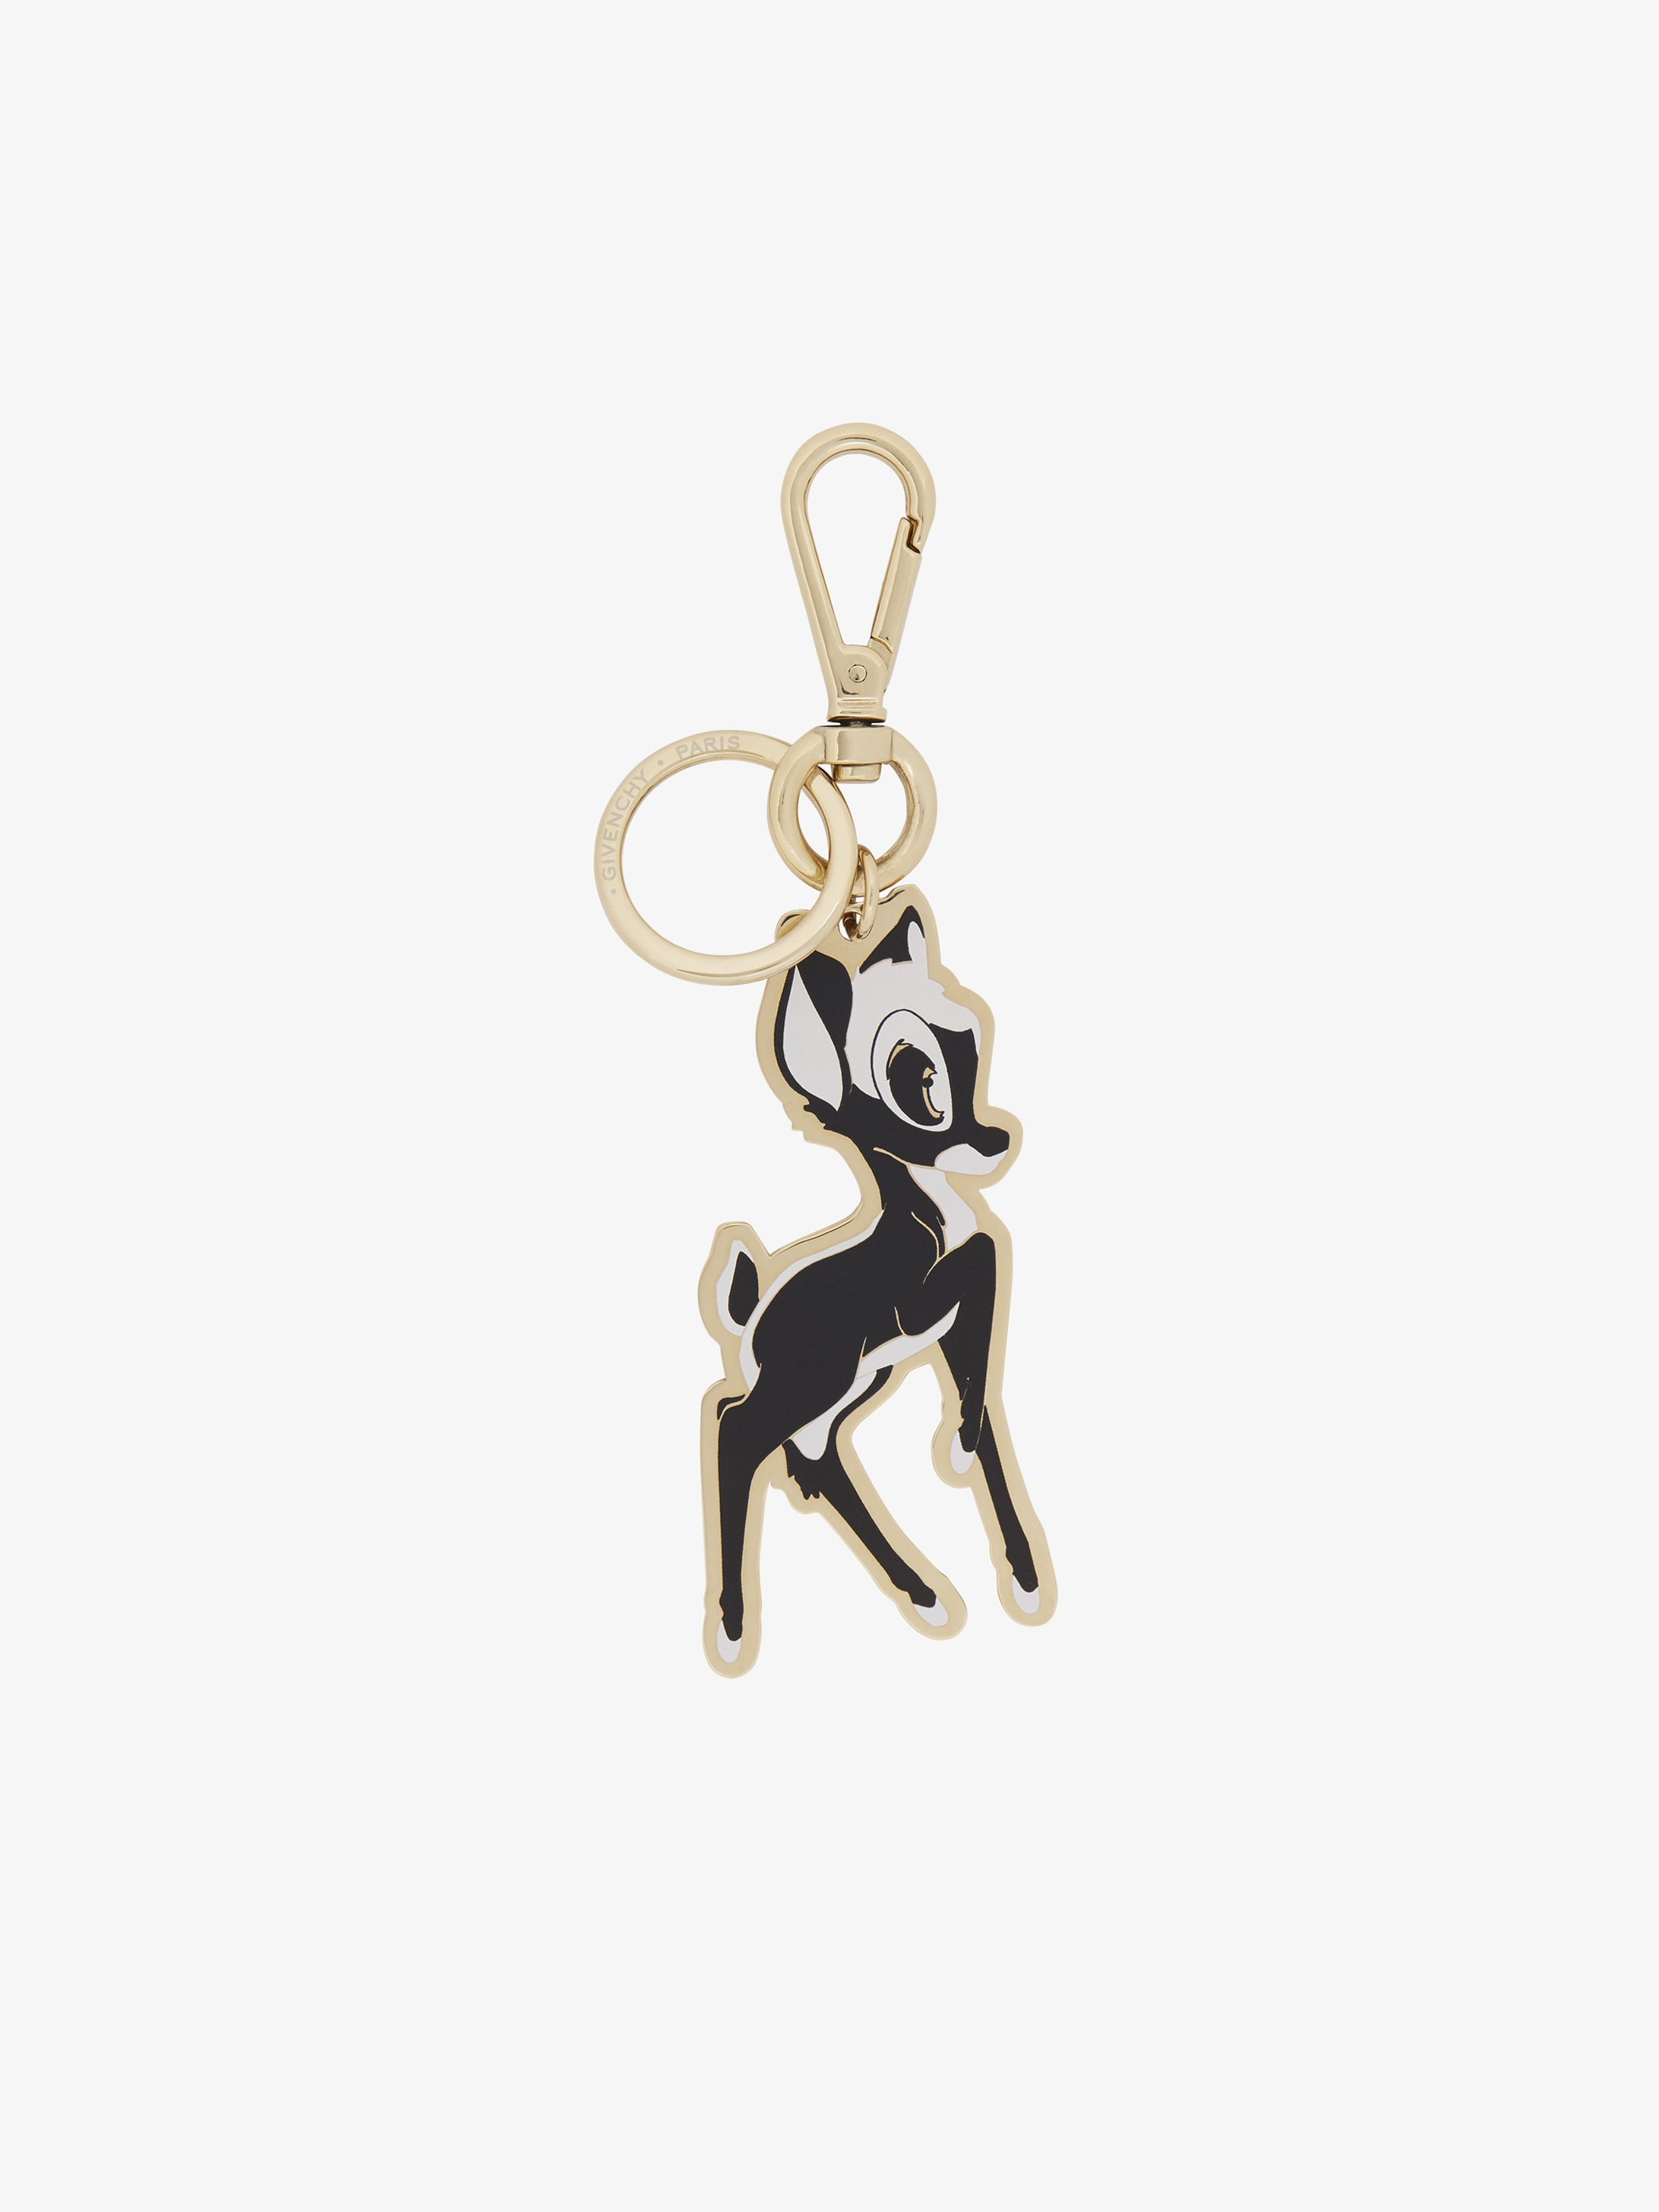 Givenchy Bambi charm | GIVENCHY Paris